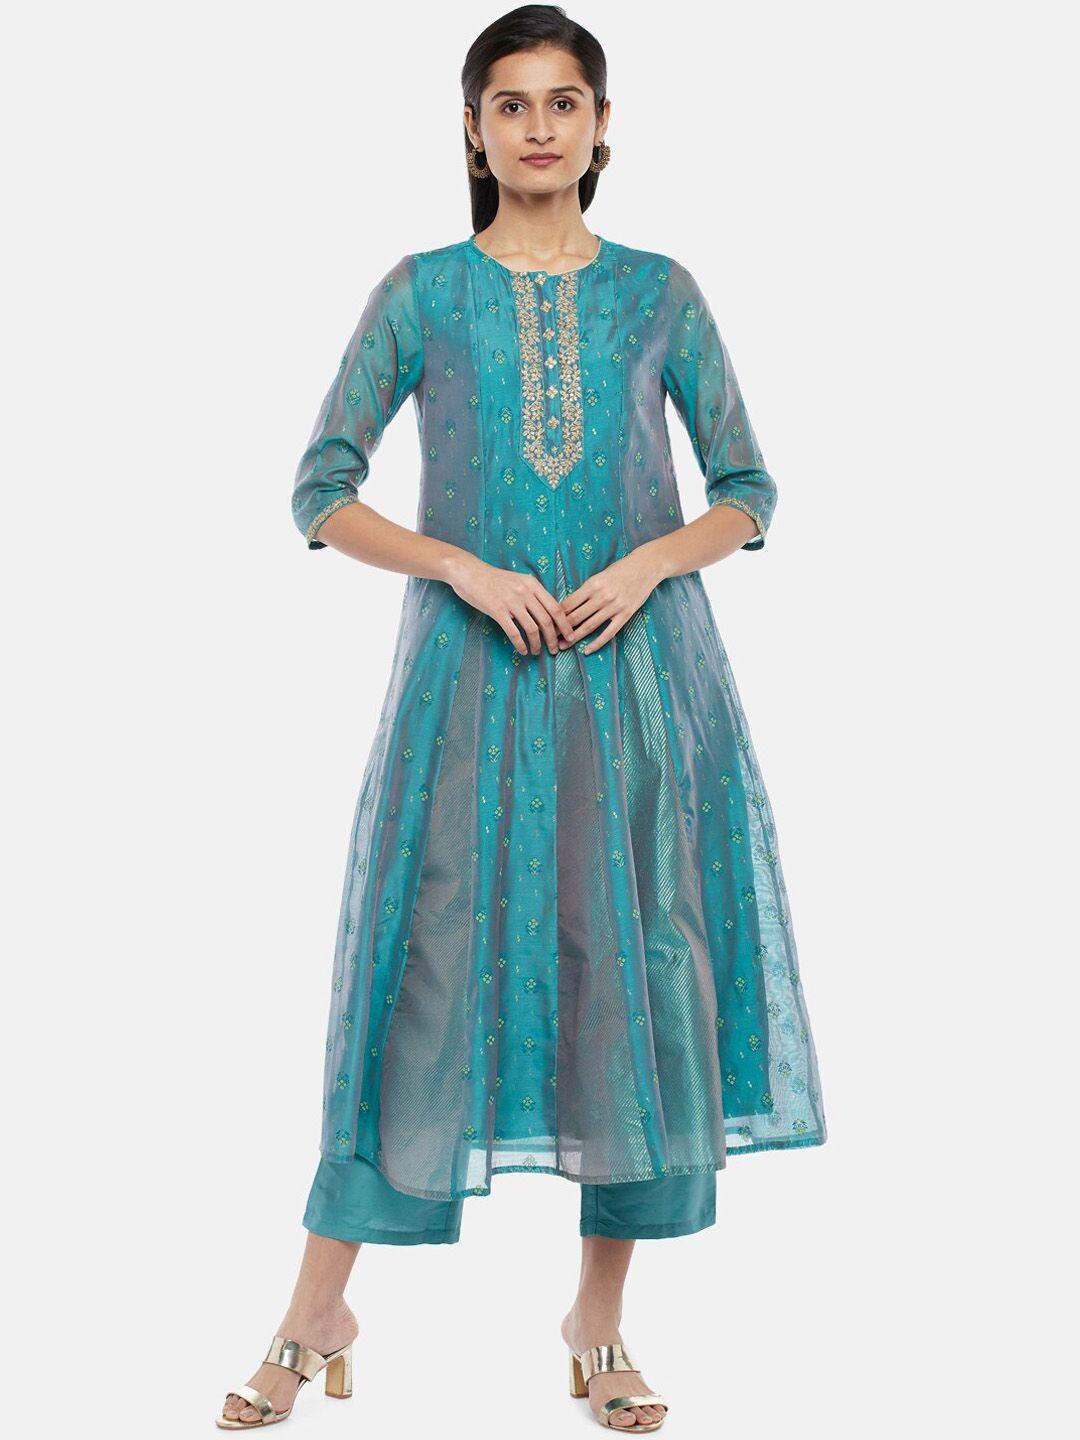 rangmanch by pantaloons women blue ethnic motifs embroidered chanderi cotton kurta set